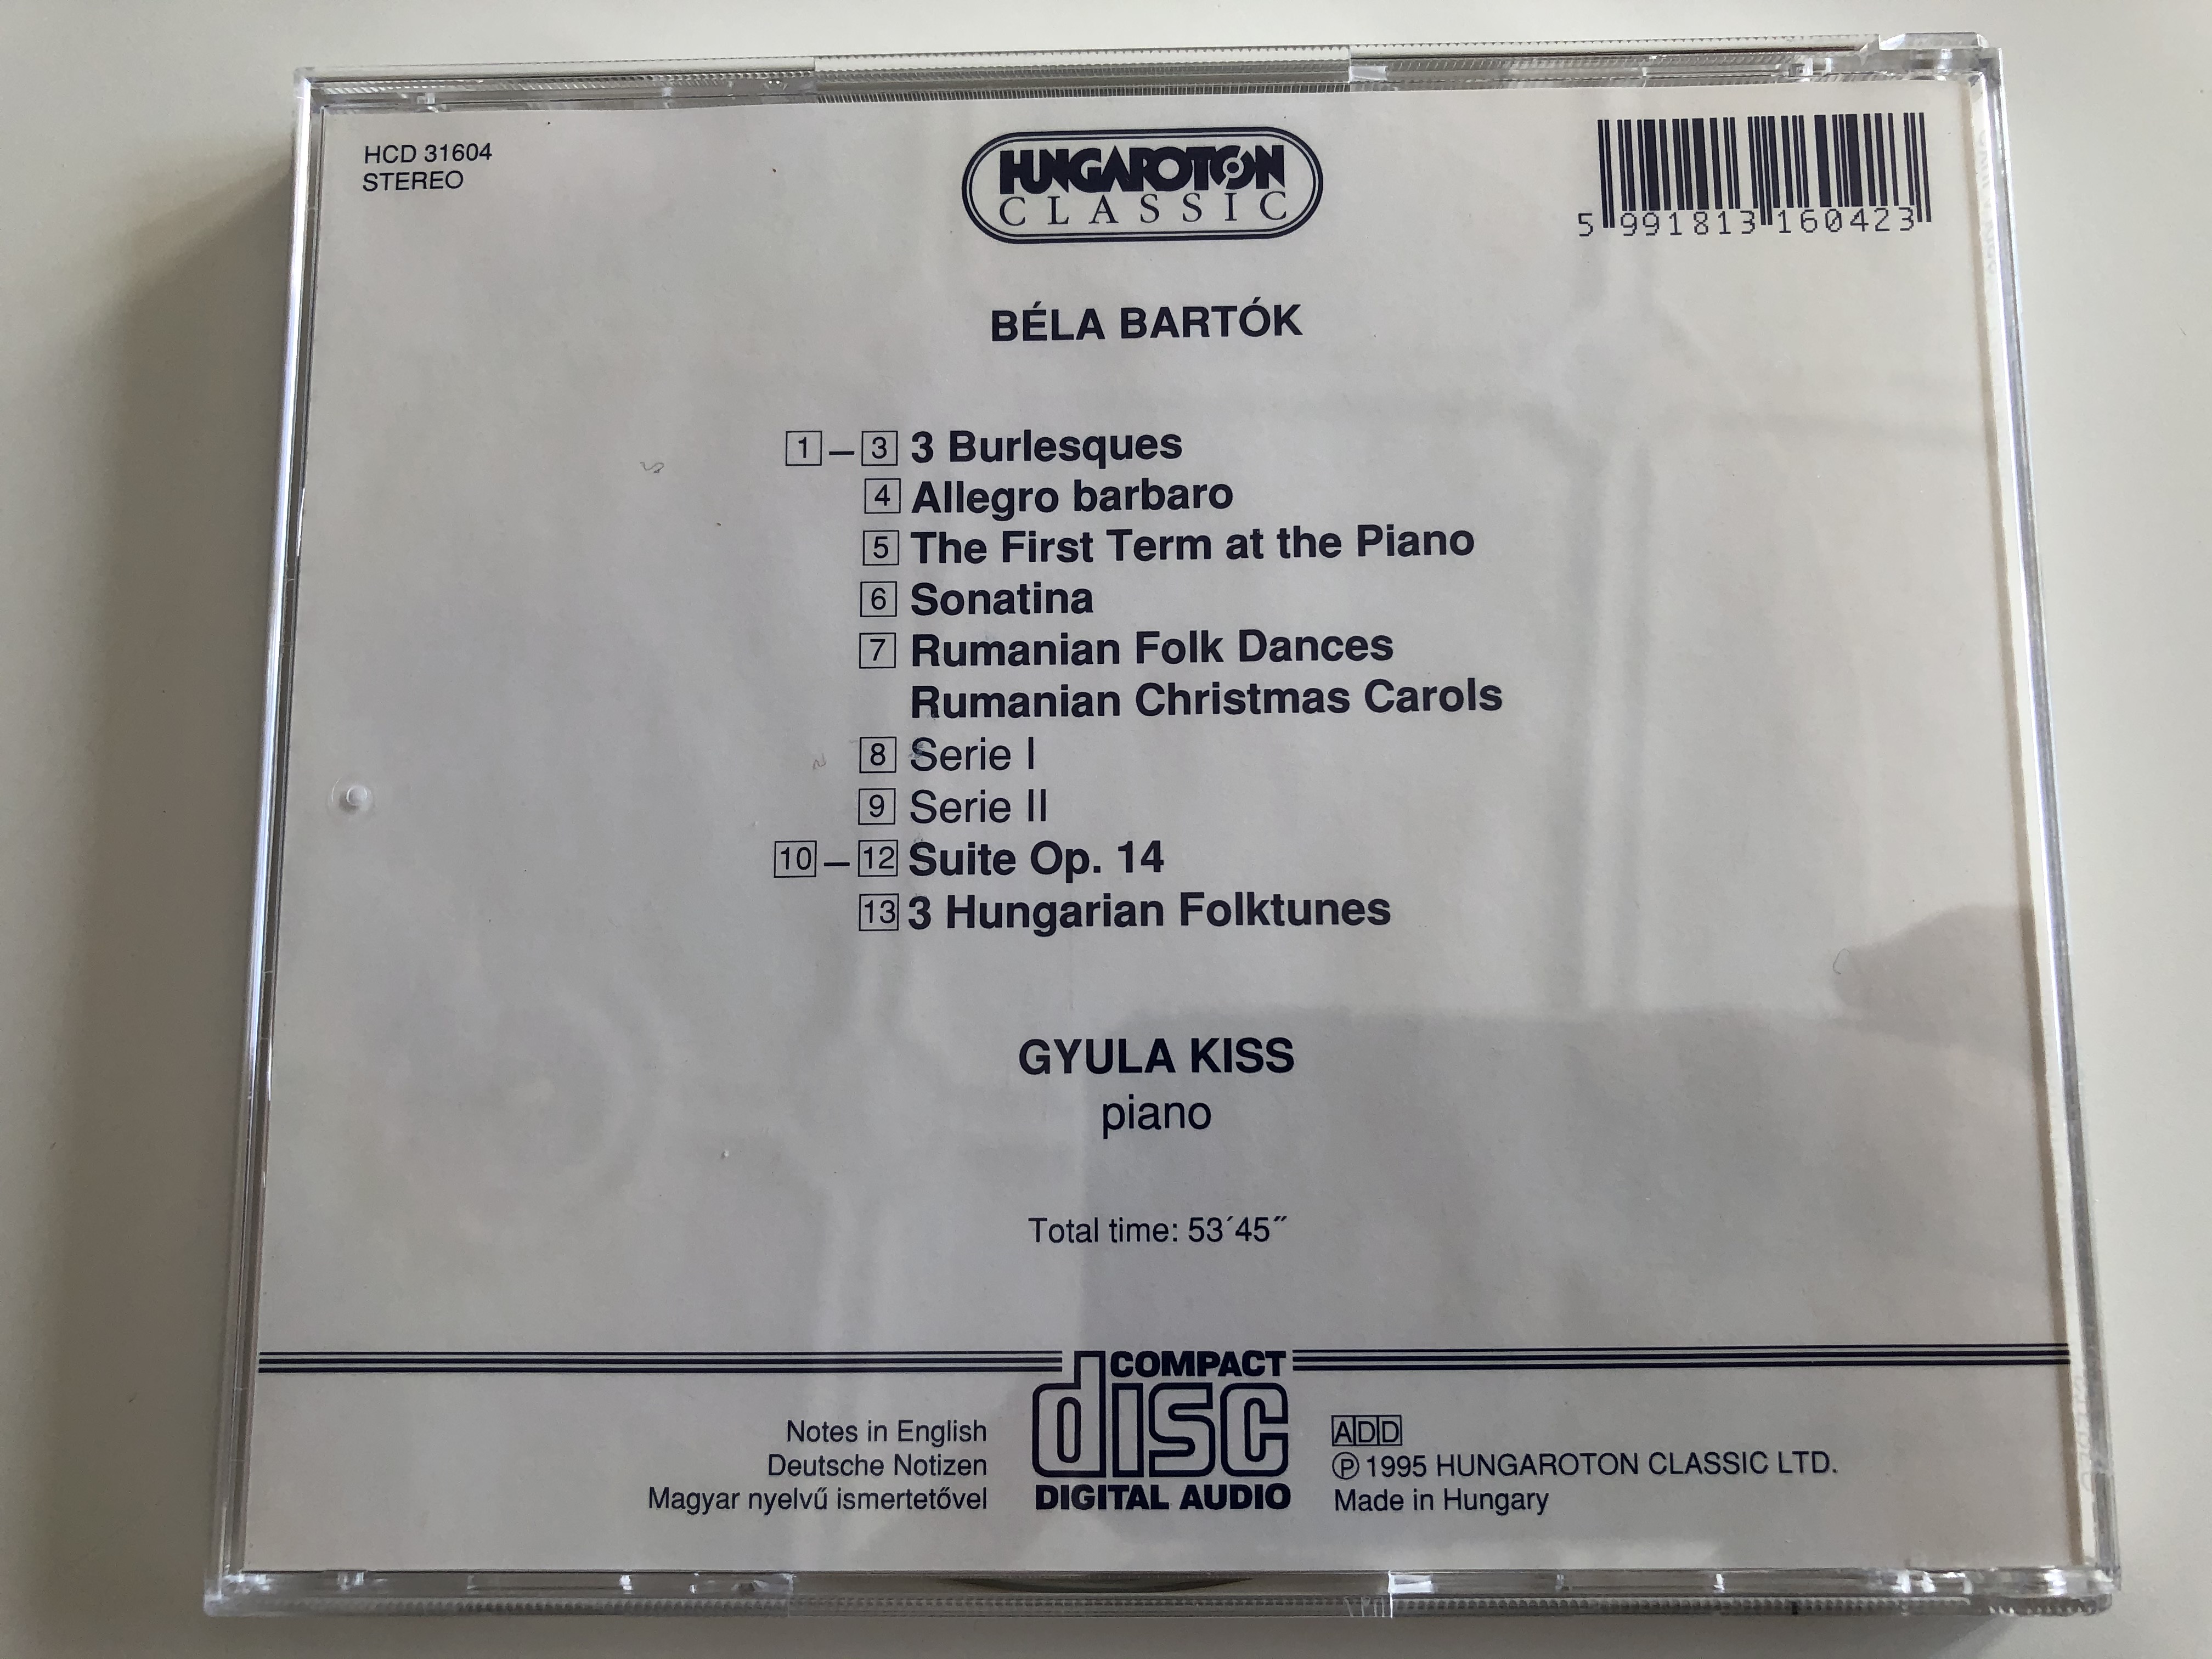 bartok-3-burlesques-allegro-barbaro-sonatina-the-first-term-at-the-piano-suite-op.-14-gyula-kiss-piano-hungaroton-classic-audio-cd-1995-stereo-hcd-31604-9-.jpg